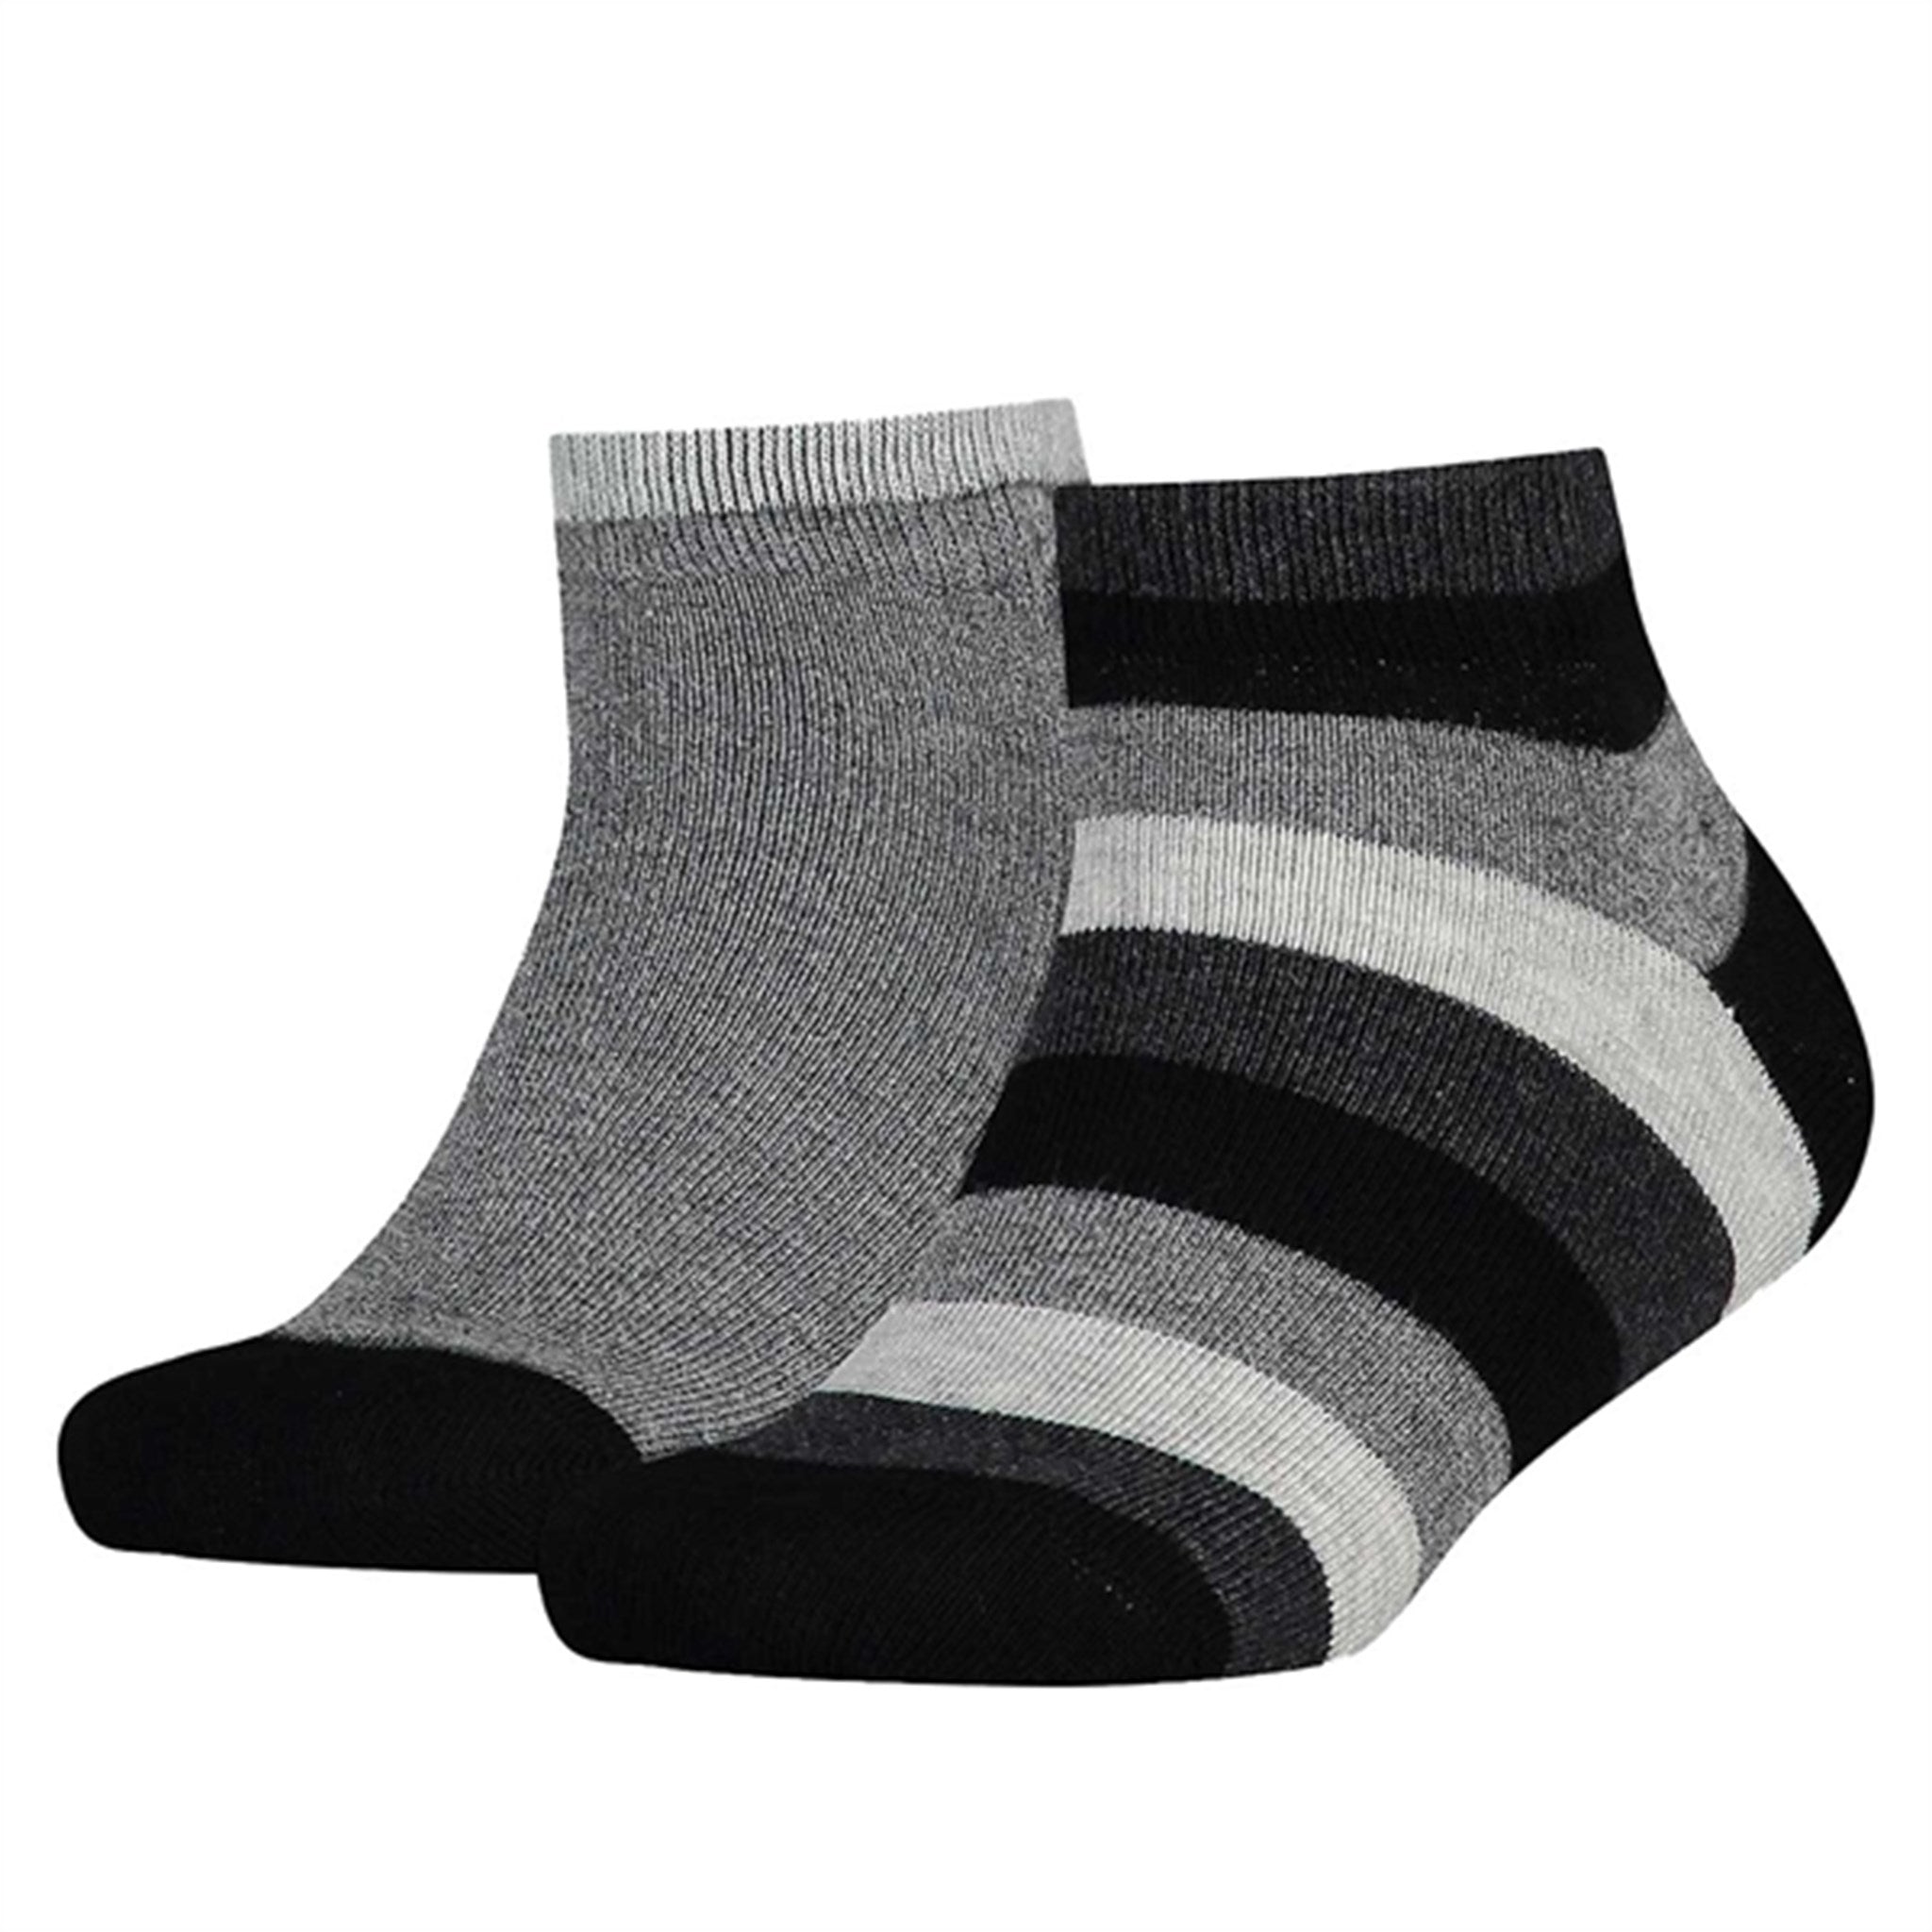 Tommy Hilfiger Kids 2-pak Basic Quarter Socks Black Striped